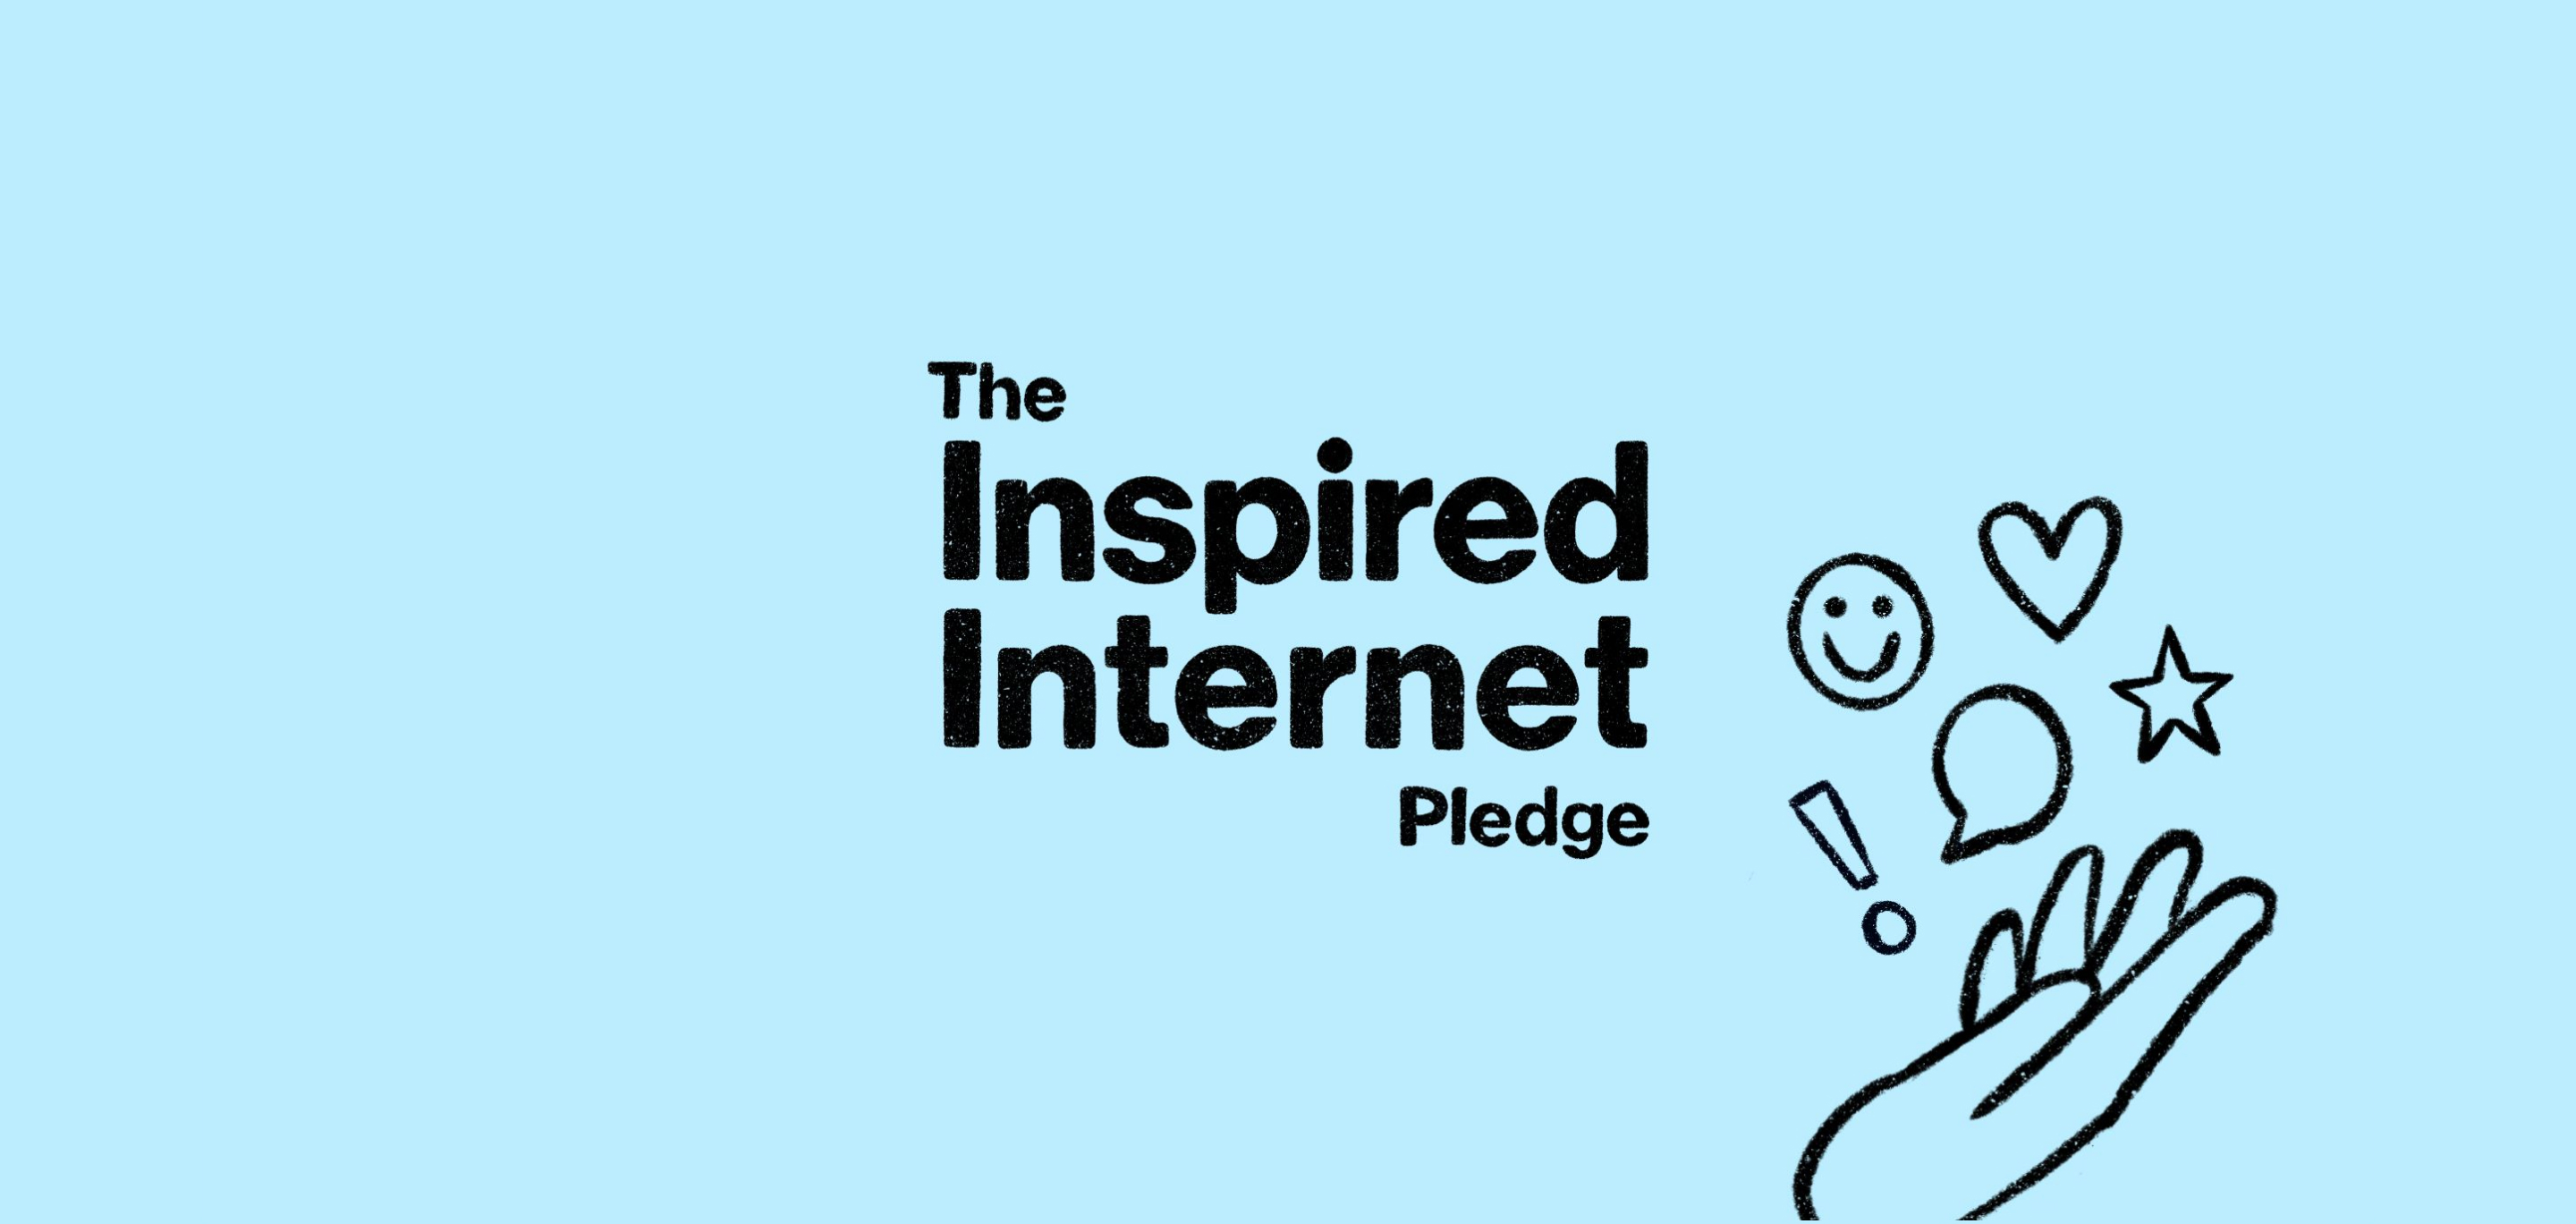 The Inspired Internet Pledge